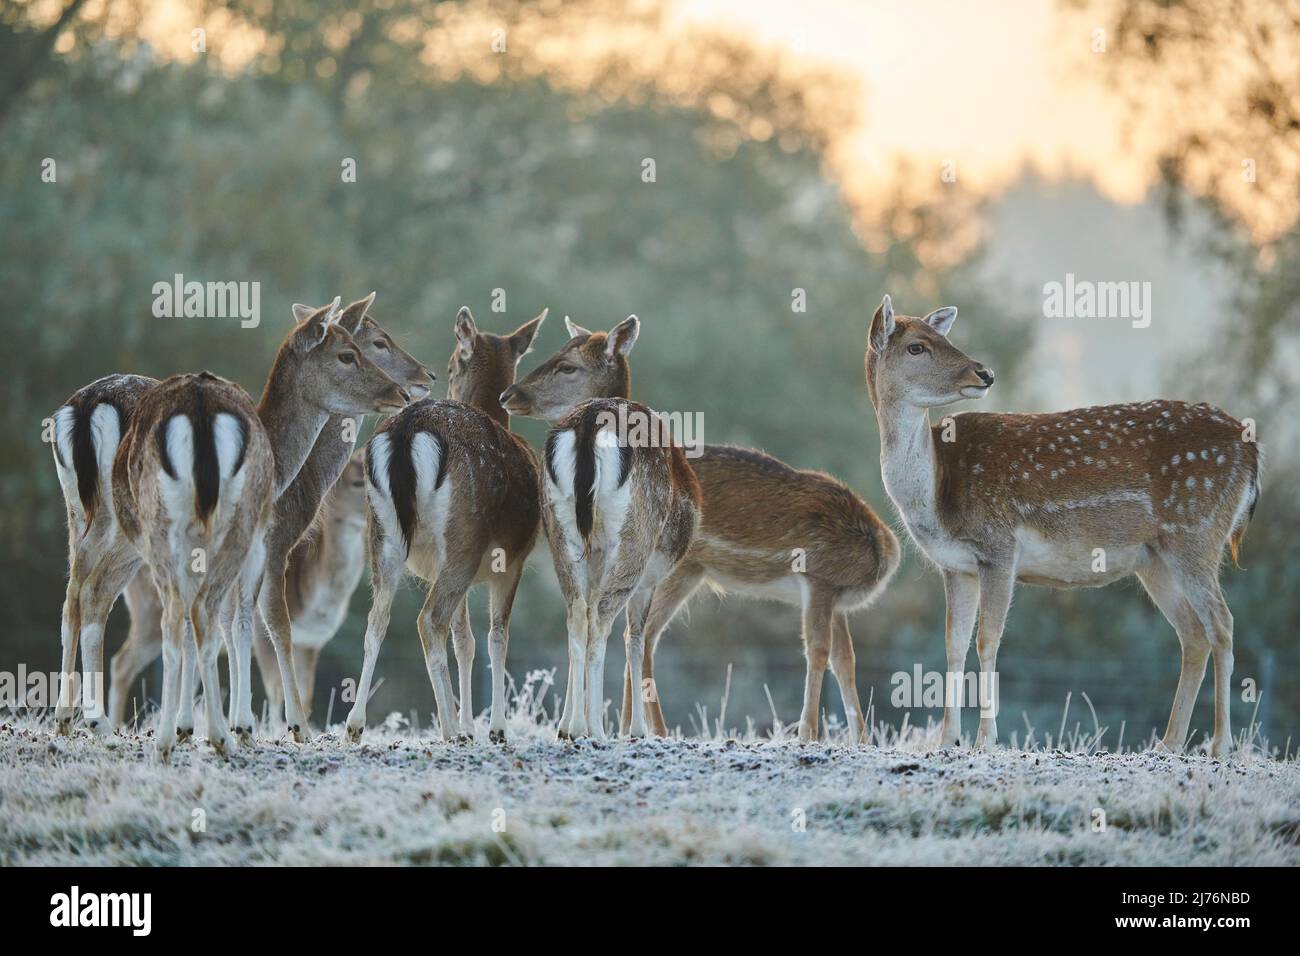 Fallow deer (Dama dama), clearing, meadow, standing, Stock Photo